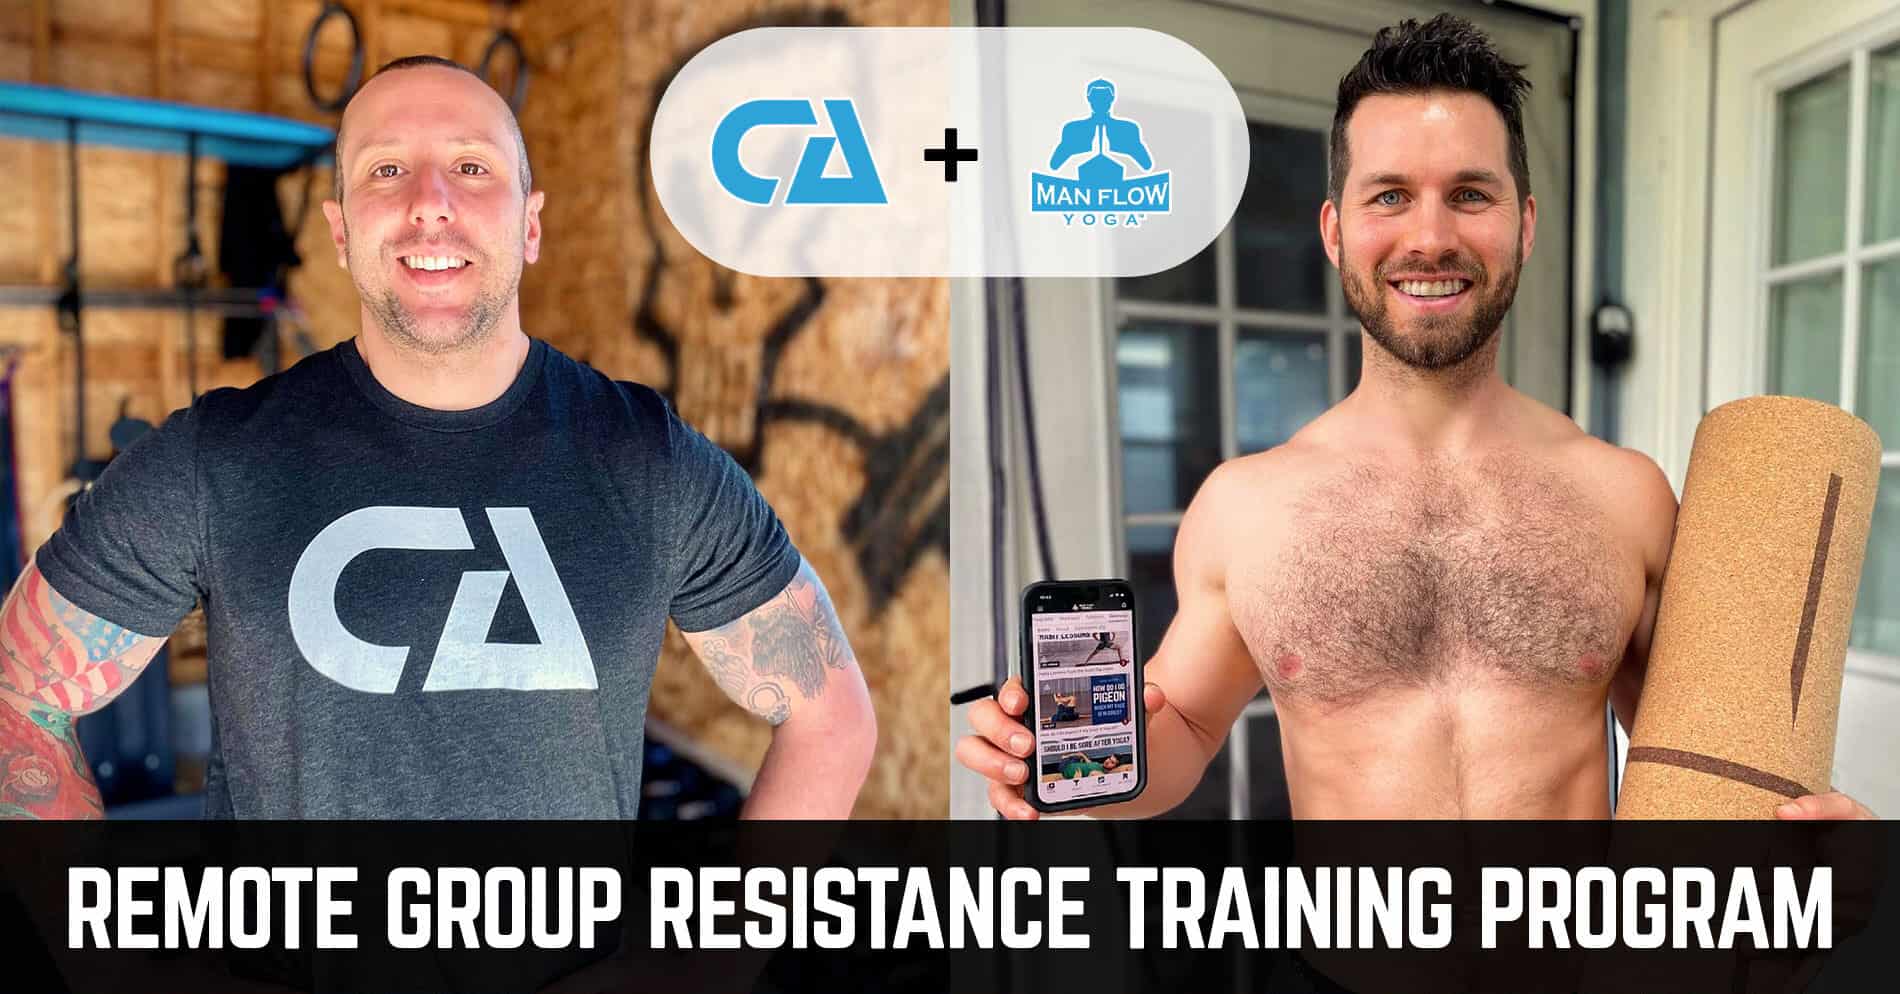 Remote Group Resistance training program for men